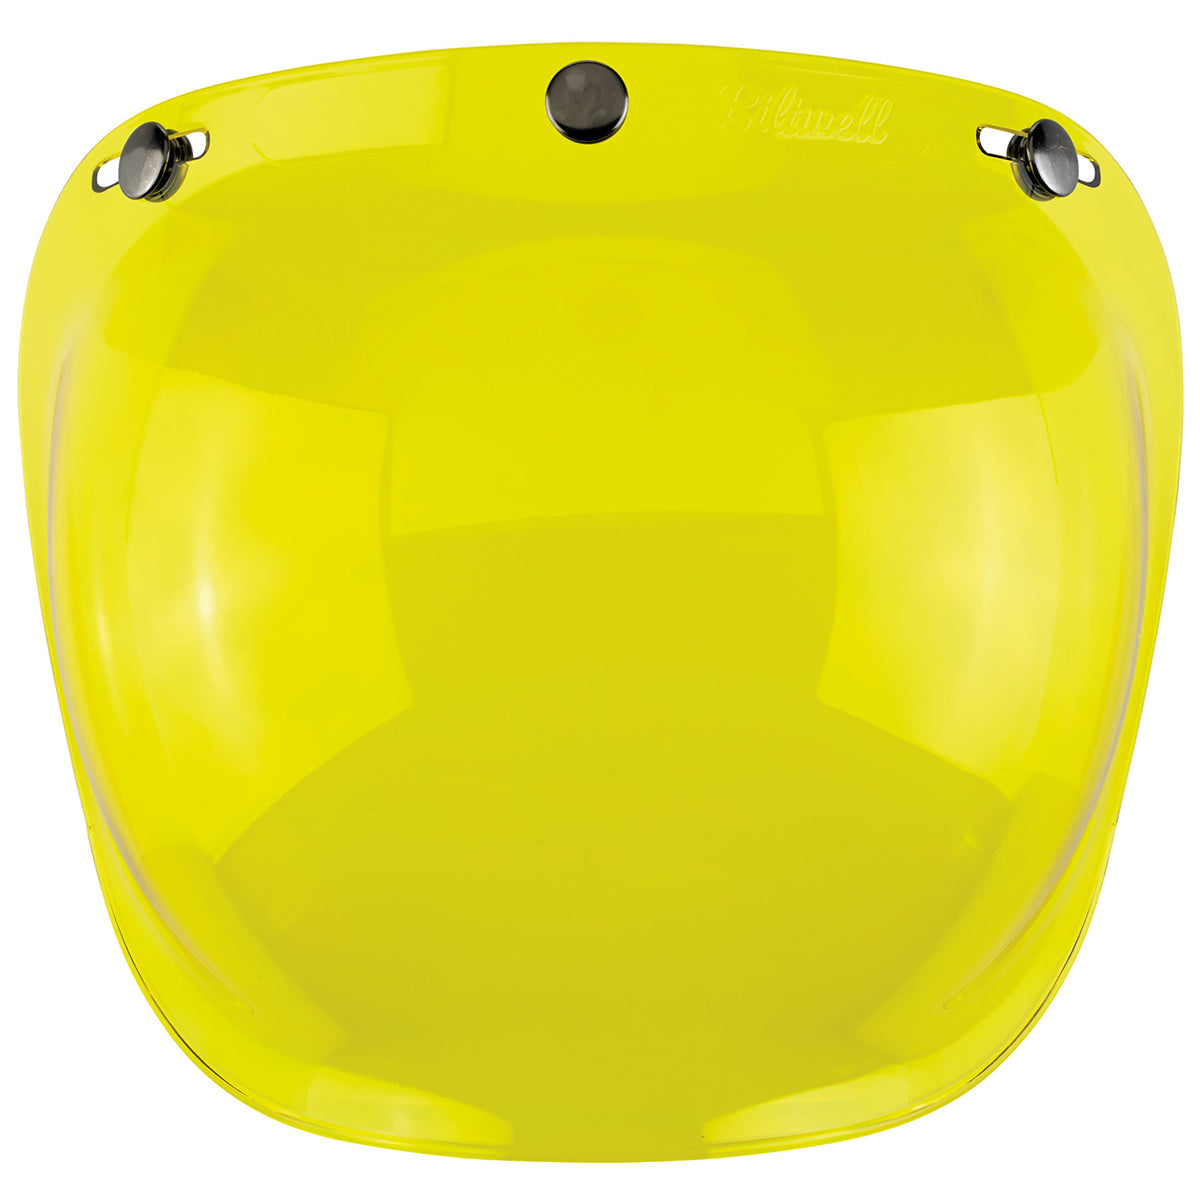 Bubble Shield Anti-Fog - Yellow